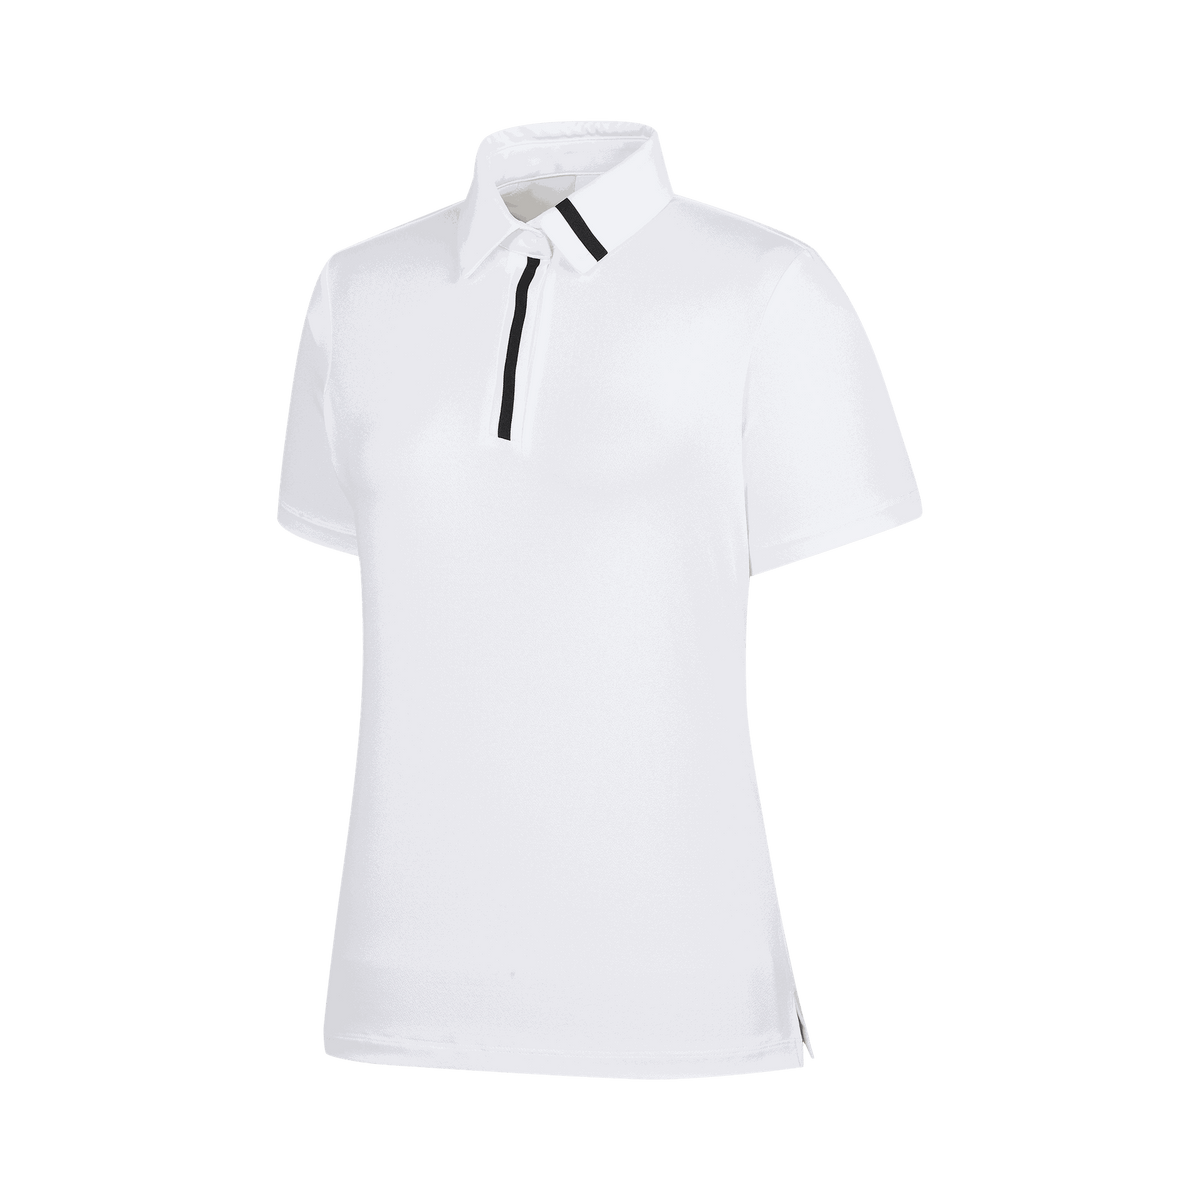 Áo thể thao PROSPECS Nữ GW-Single production line Jeeri T-shirt W-M351